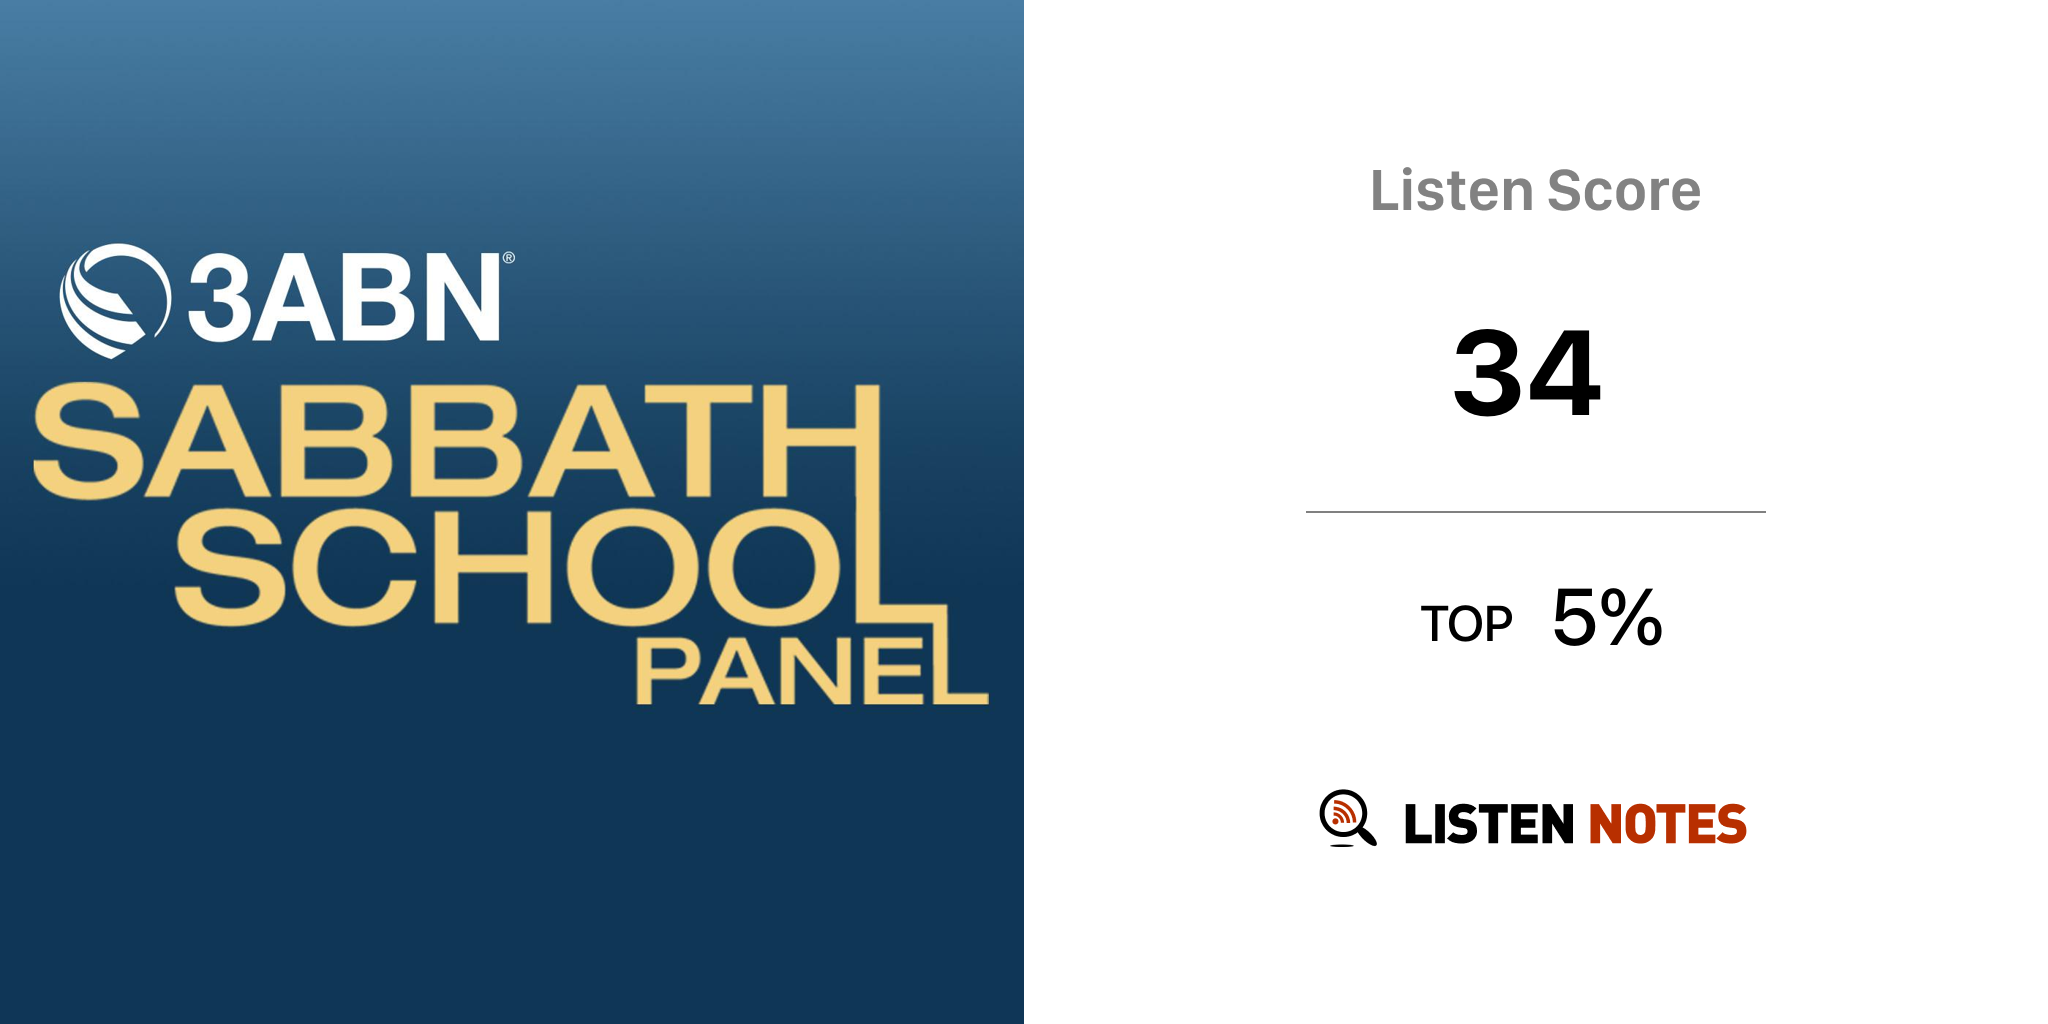 3abn Sabbath School Panel Podcast 3abn Listen Notes